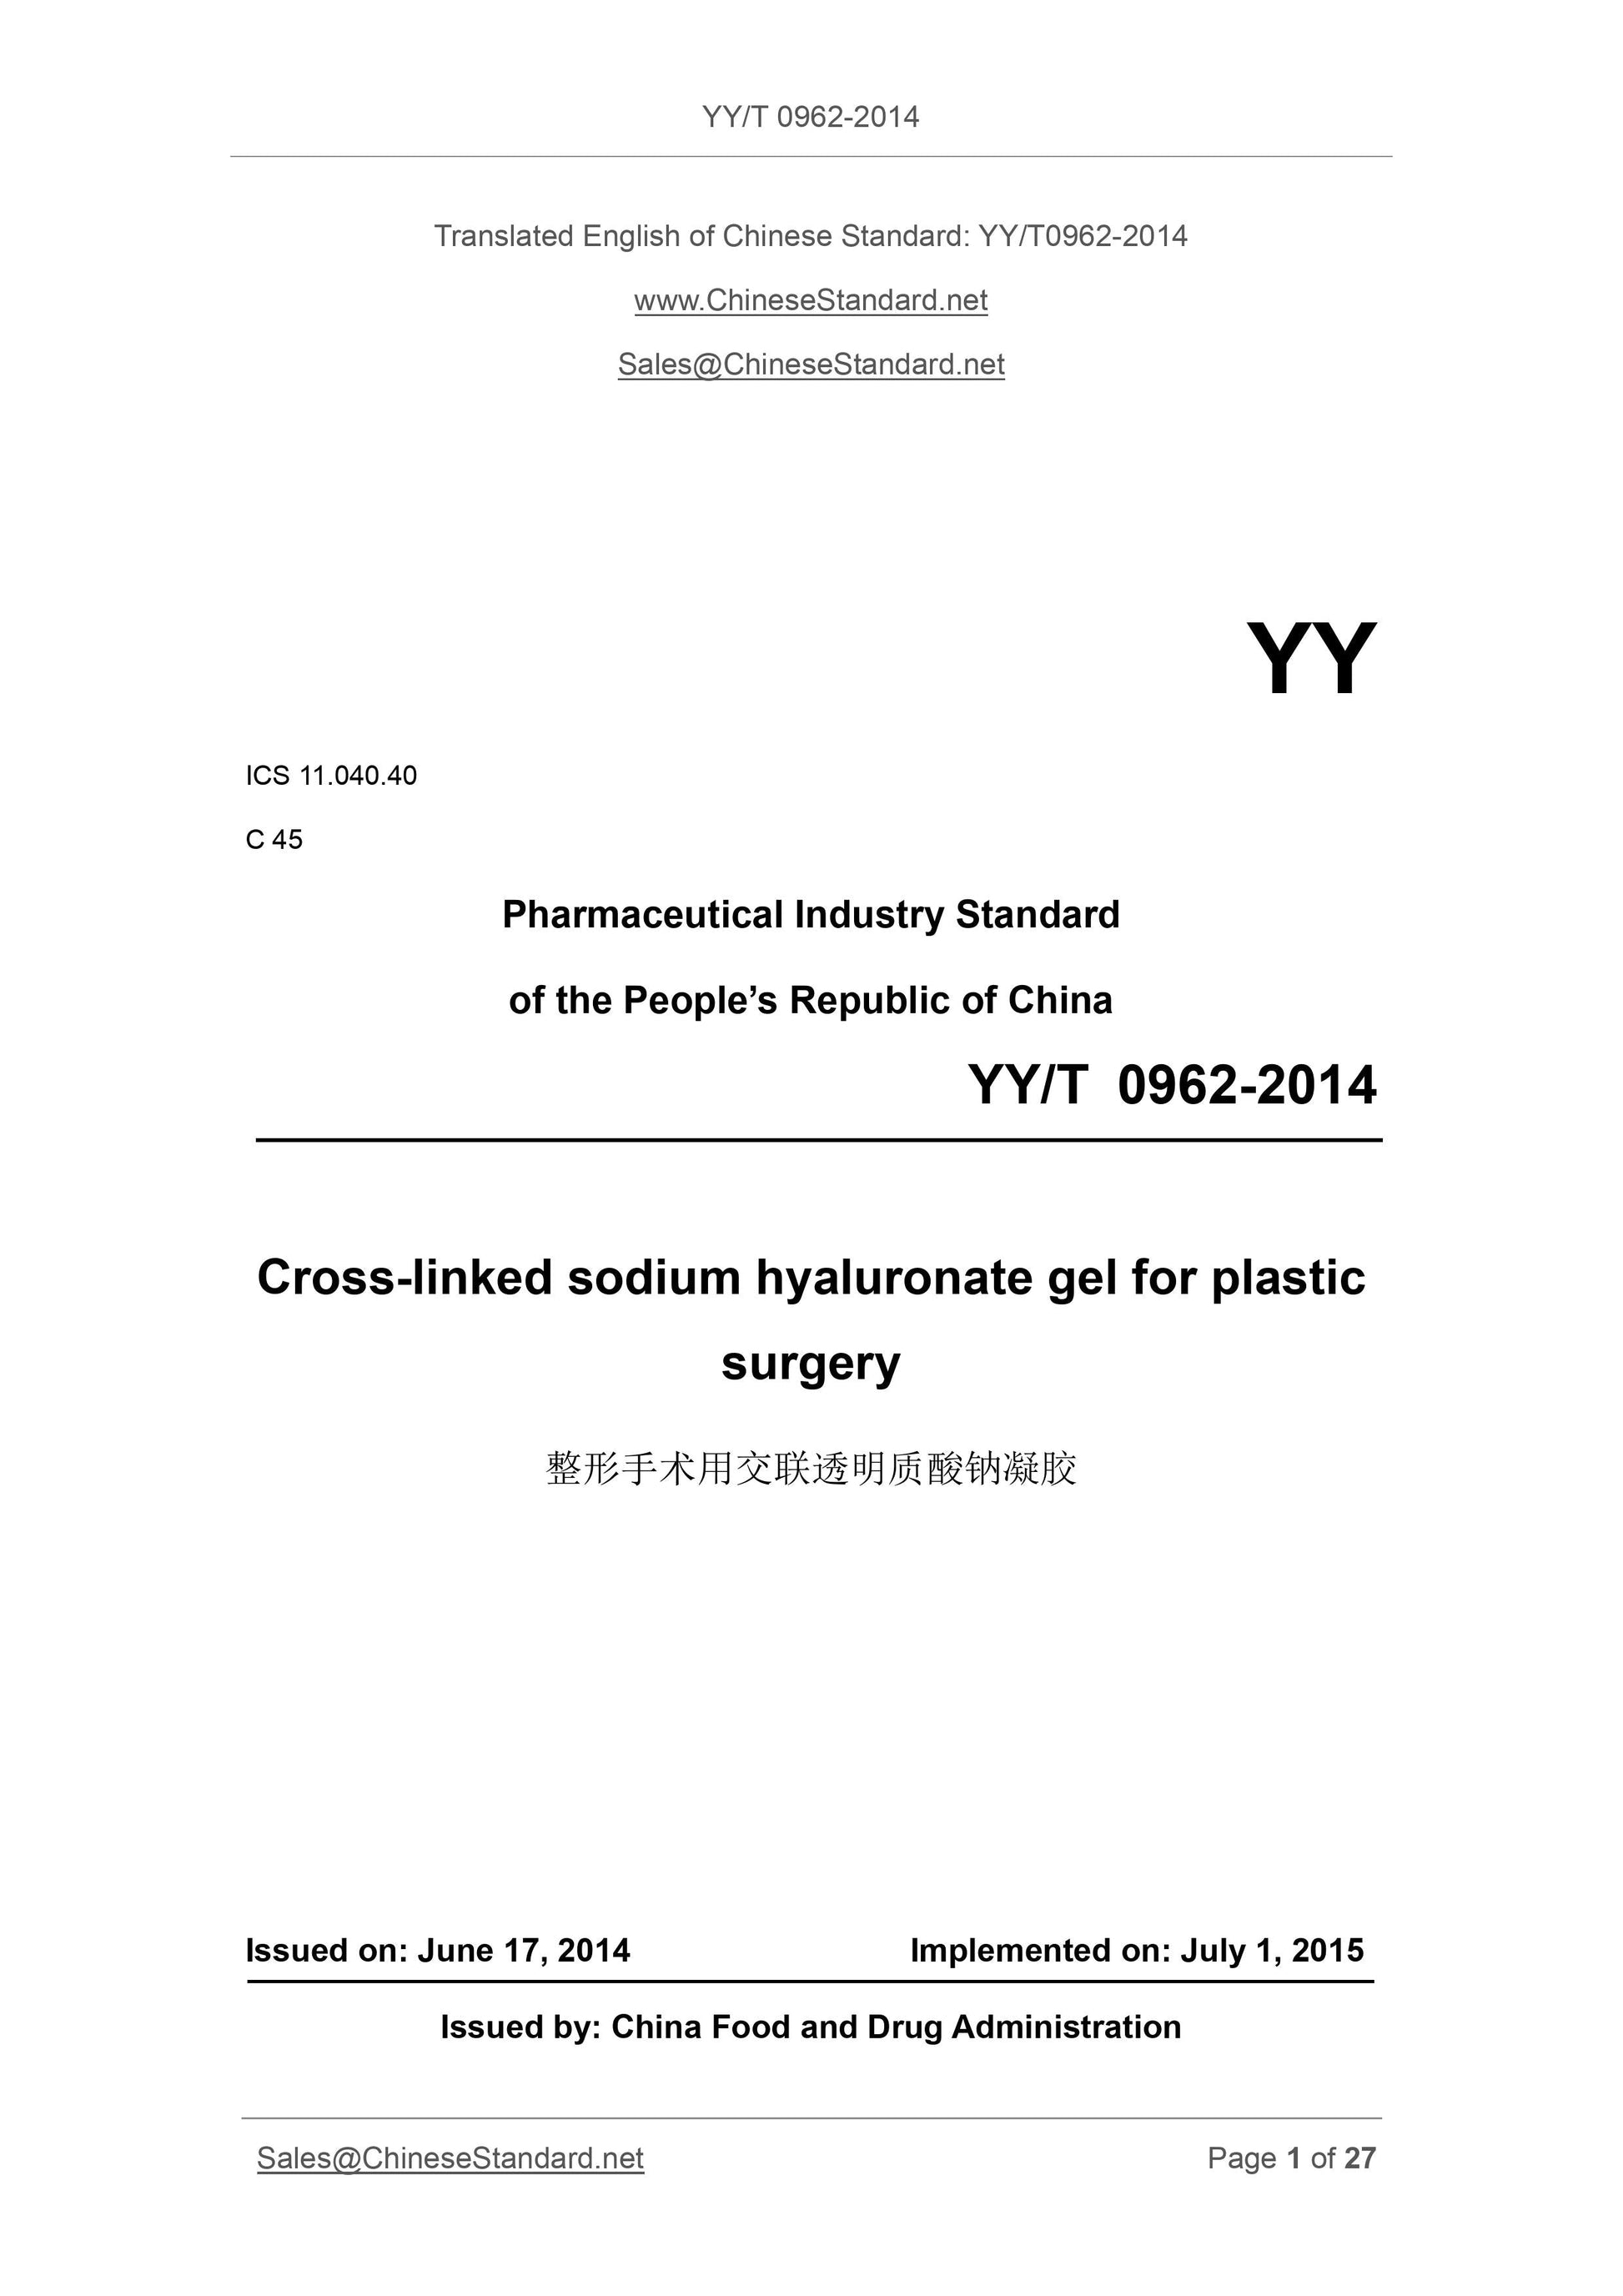 YY/T 0962-2014 Page 1